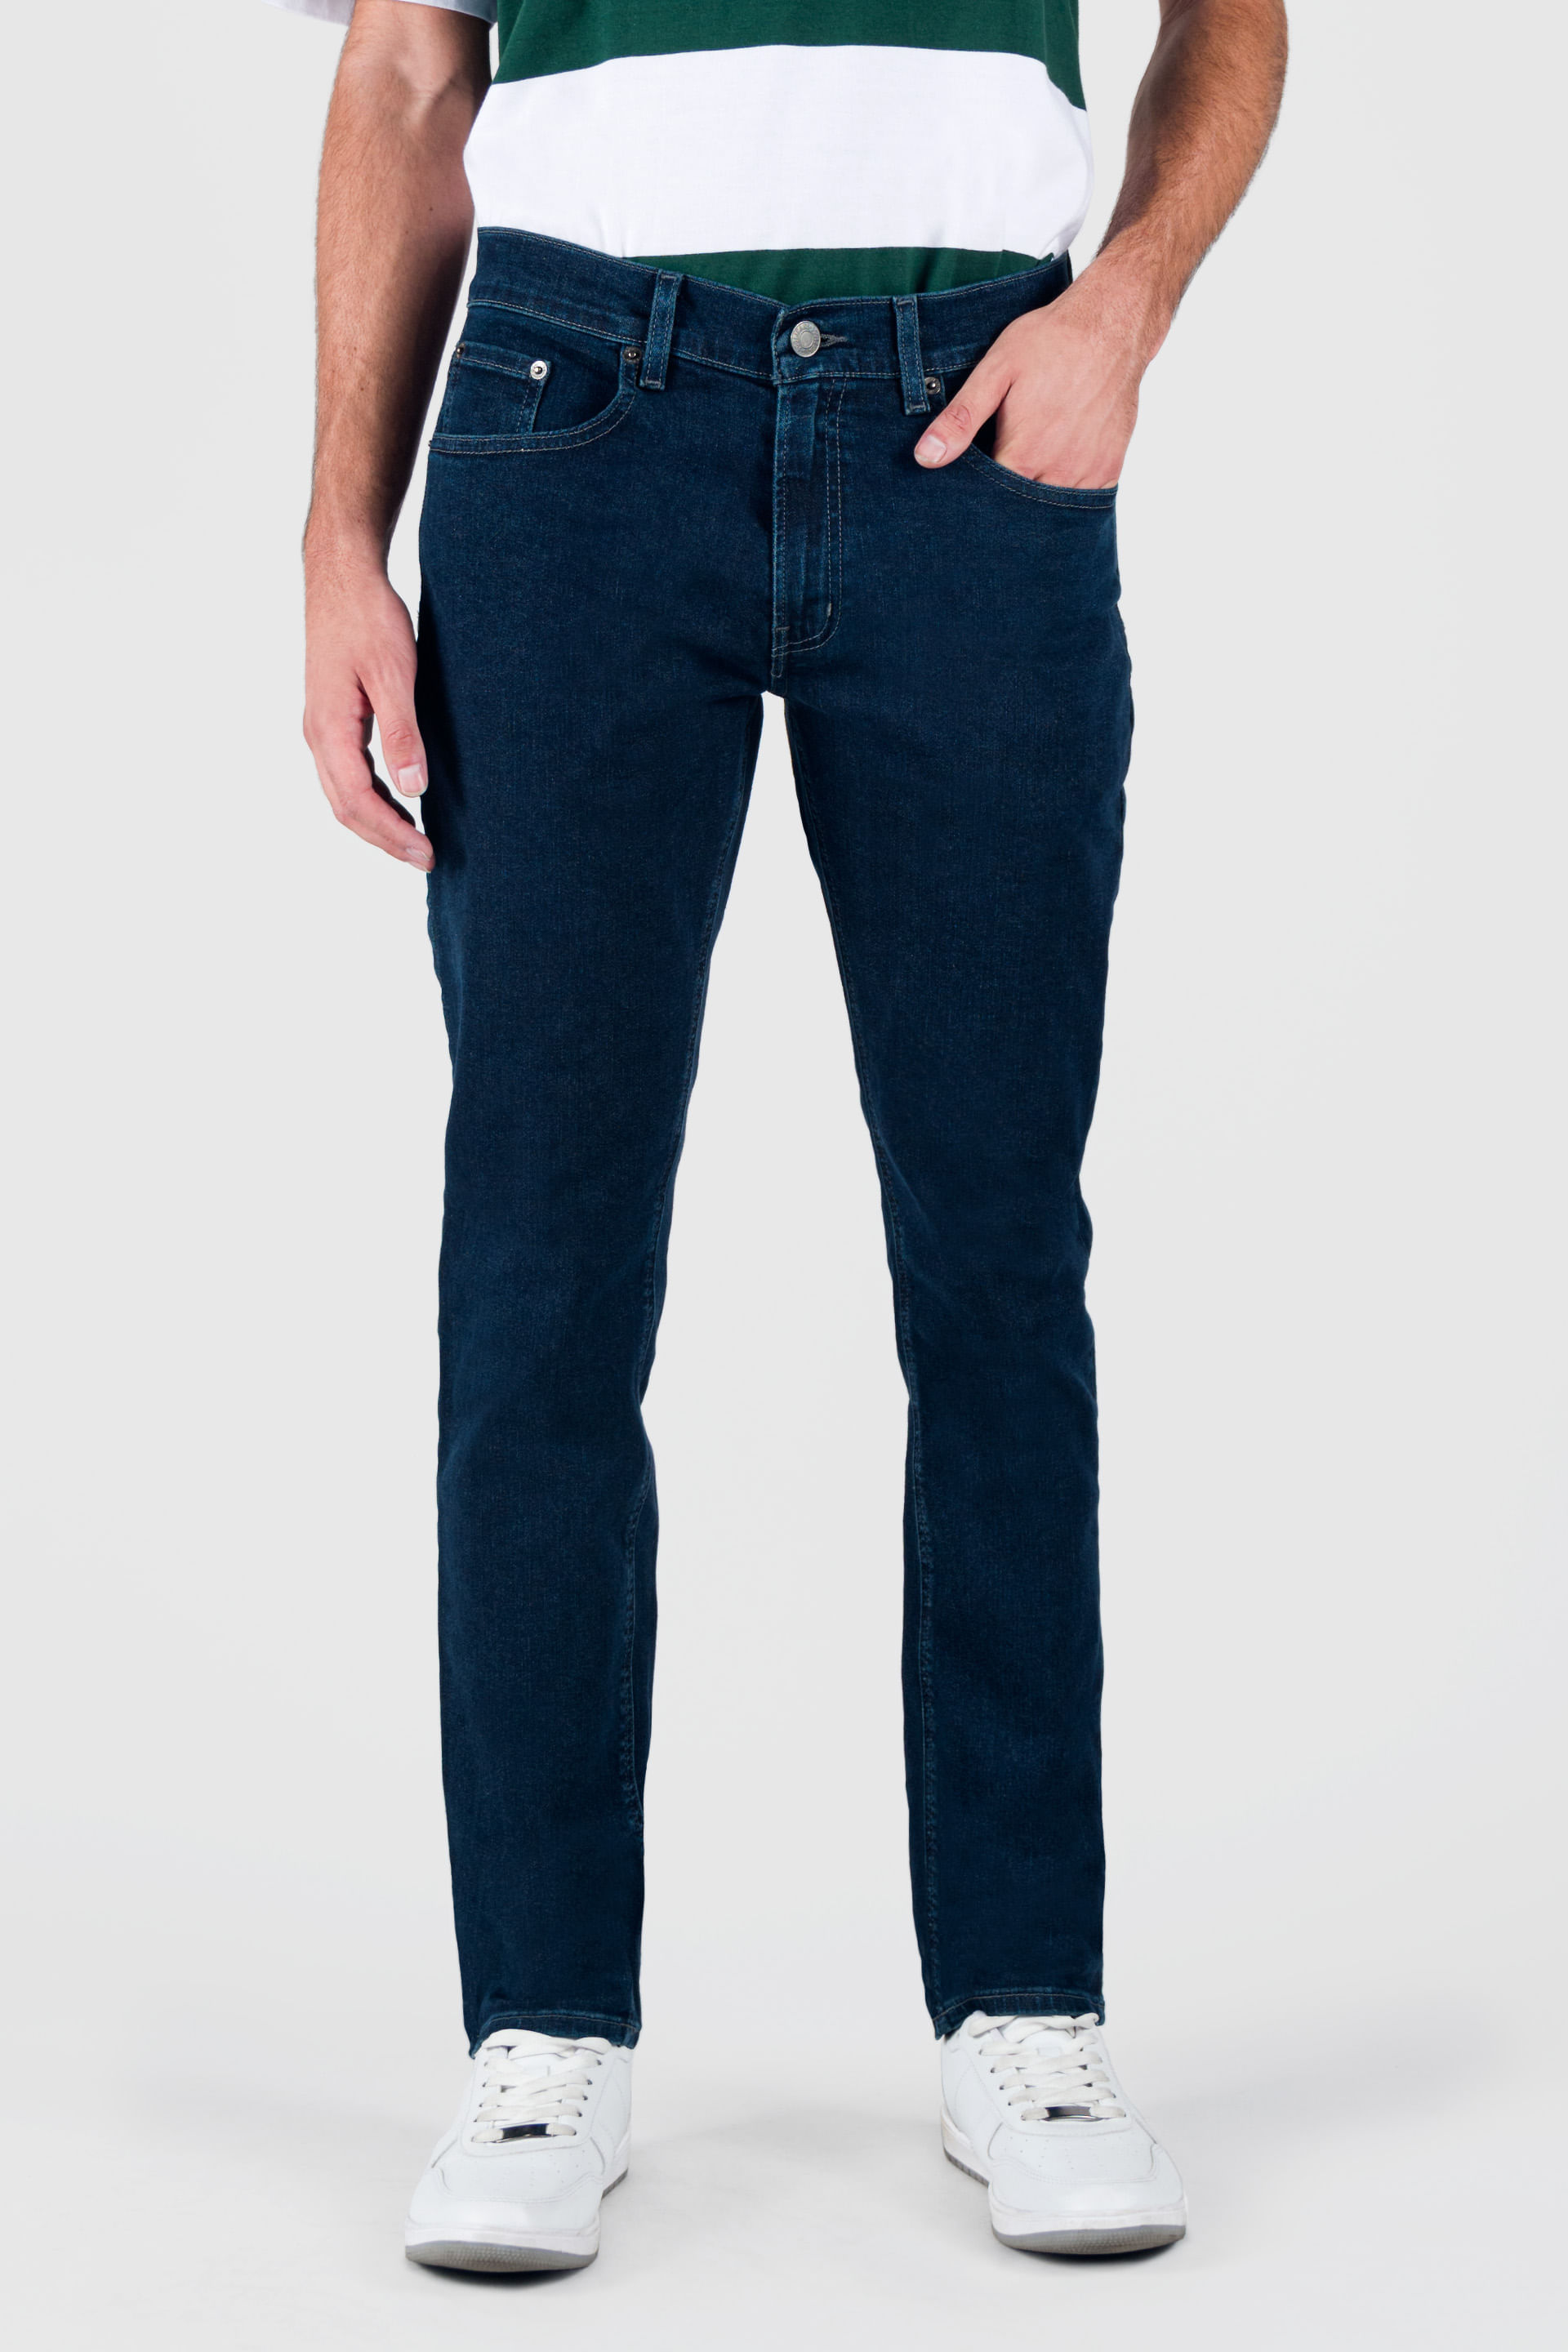 Jeans Slim Oggi - Iron para Hombre Mezclilla Azul Oscuro 80997